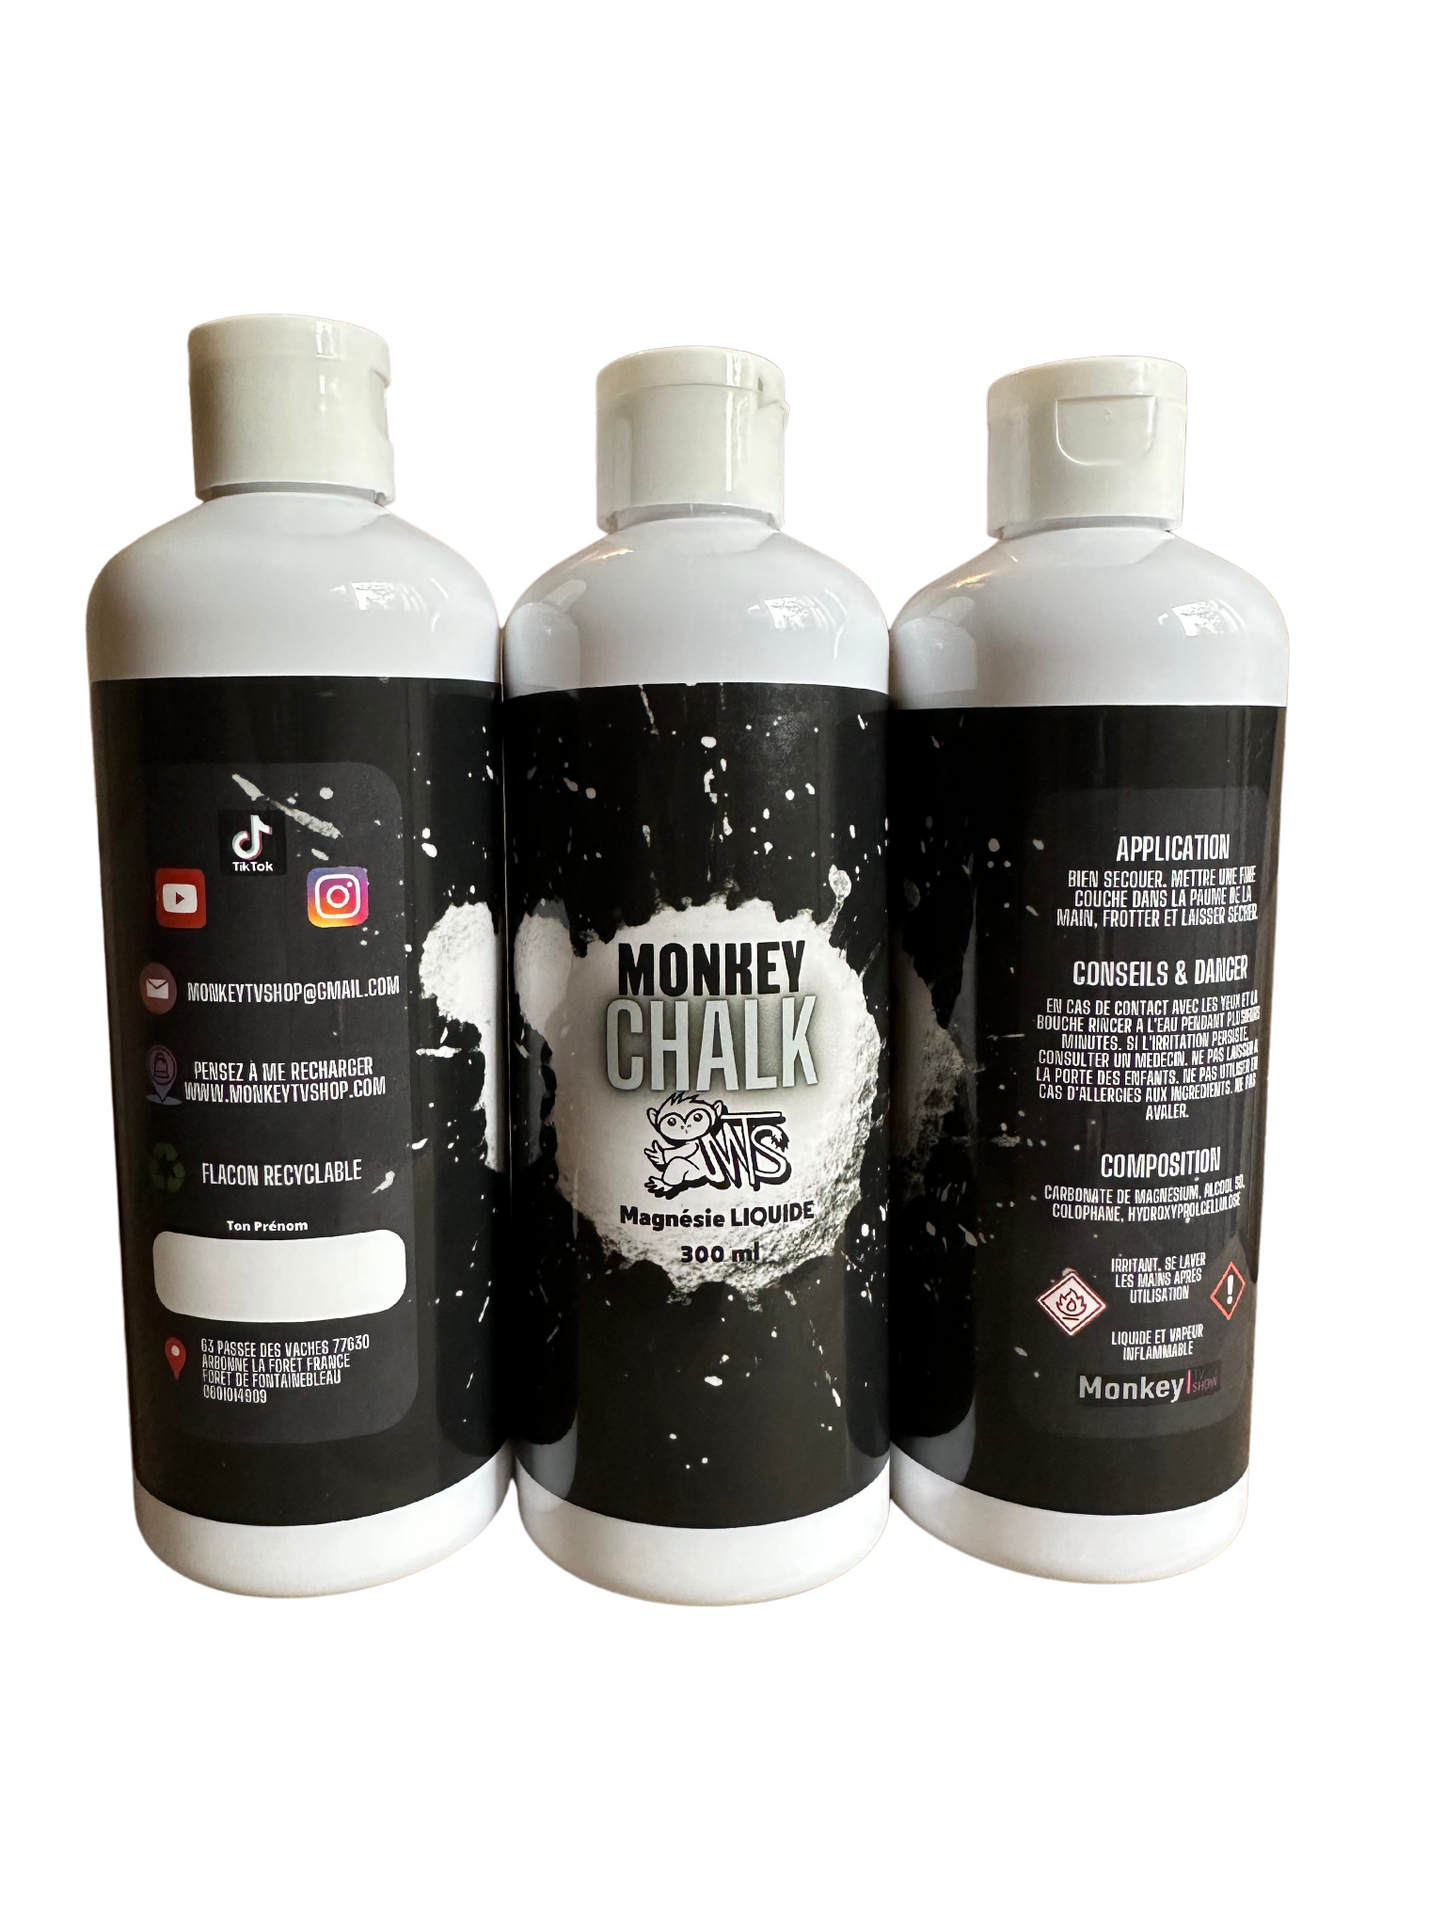 Monkey Chalk 300ml magnésie liquide – monkeytvshop